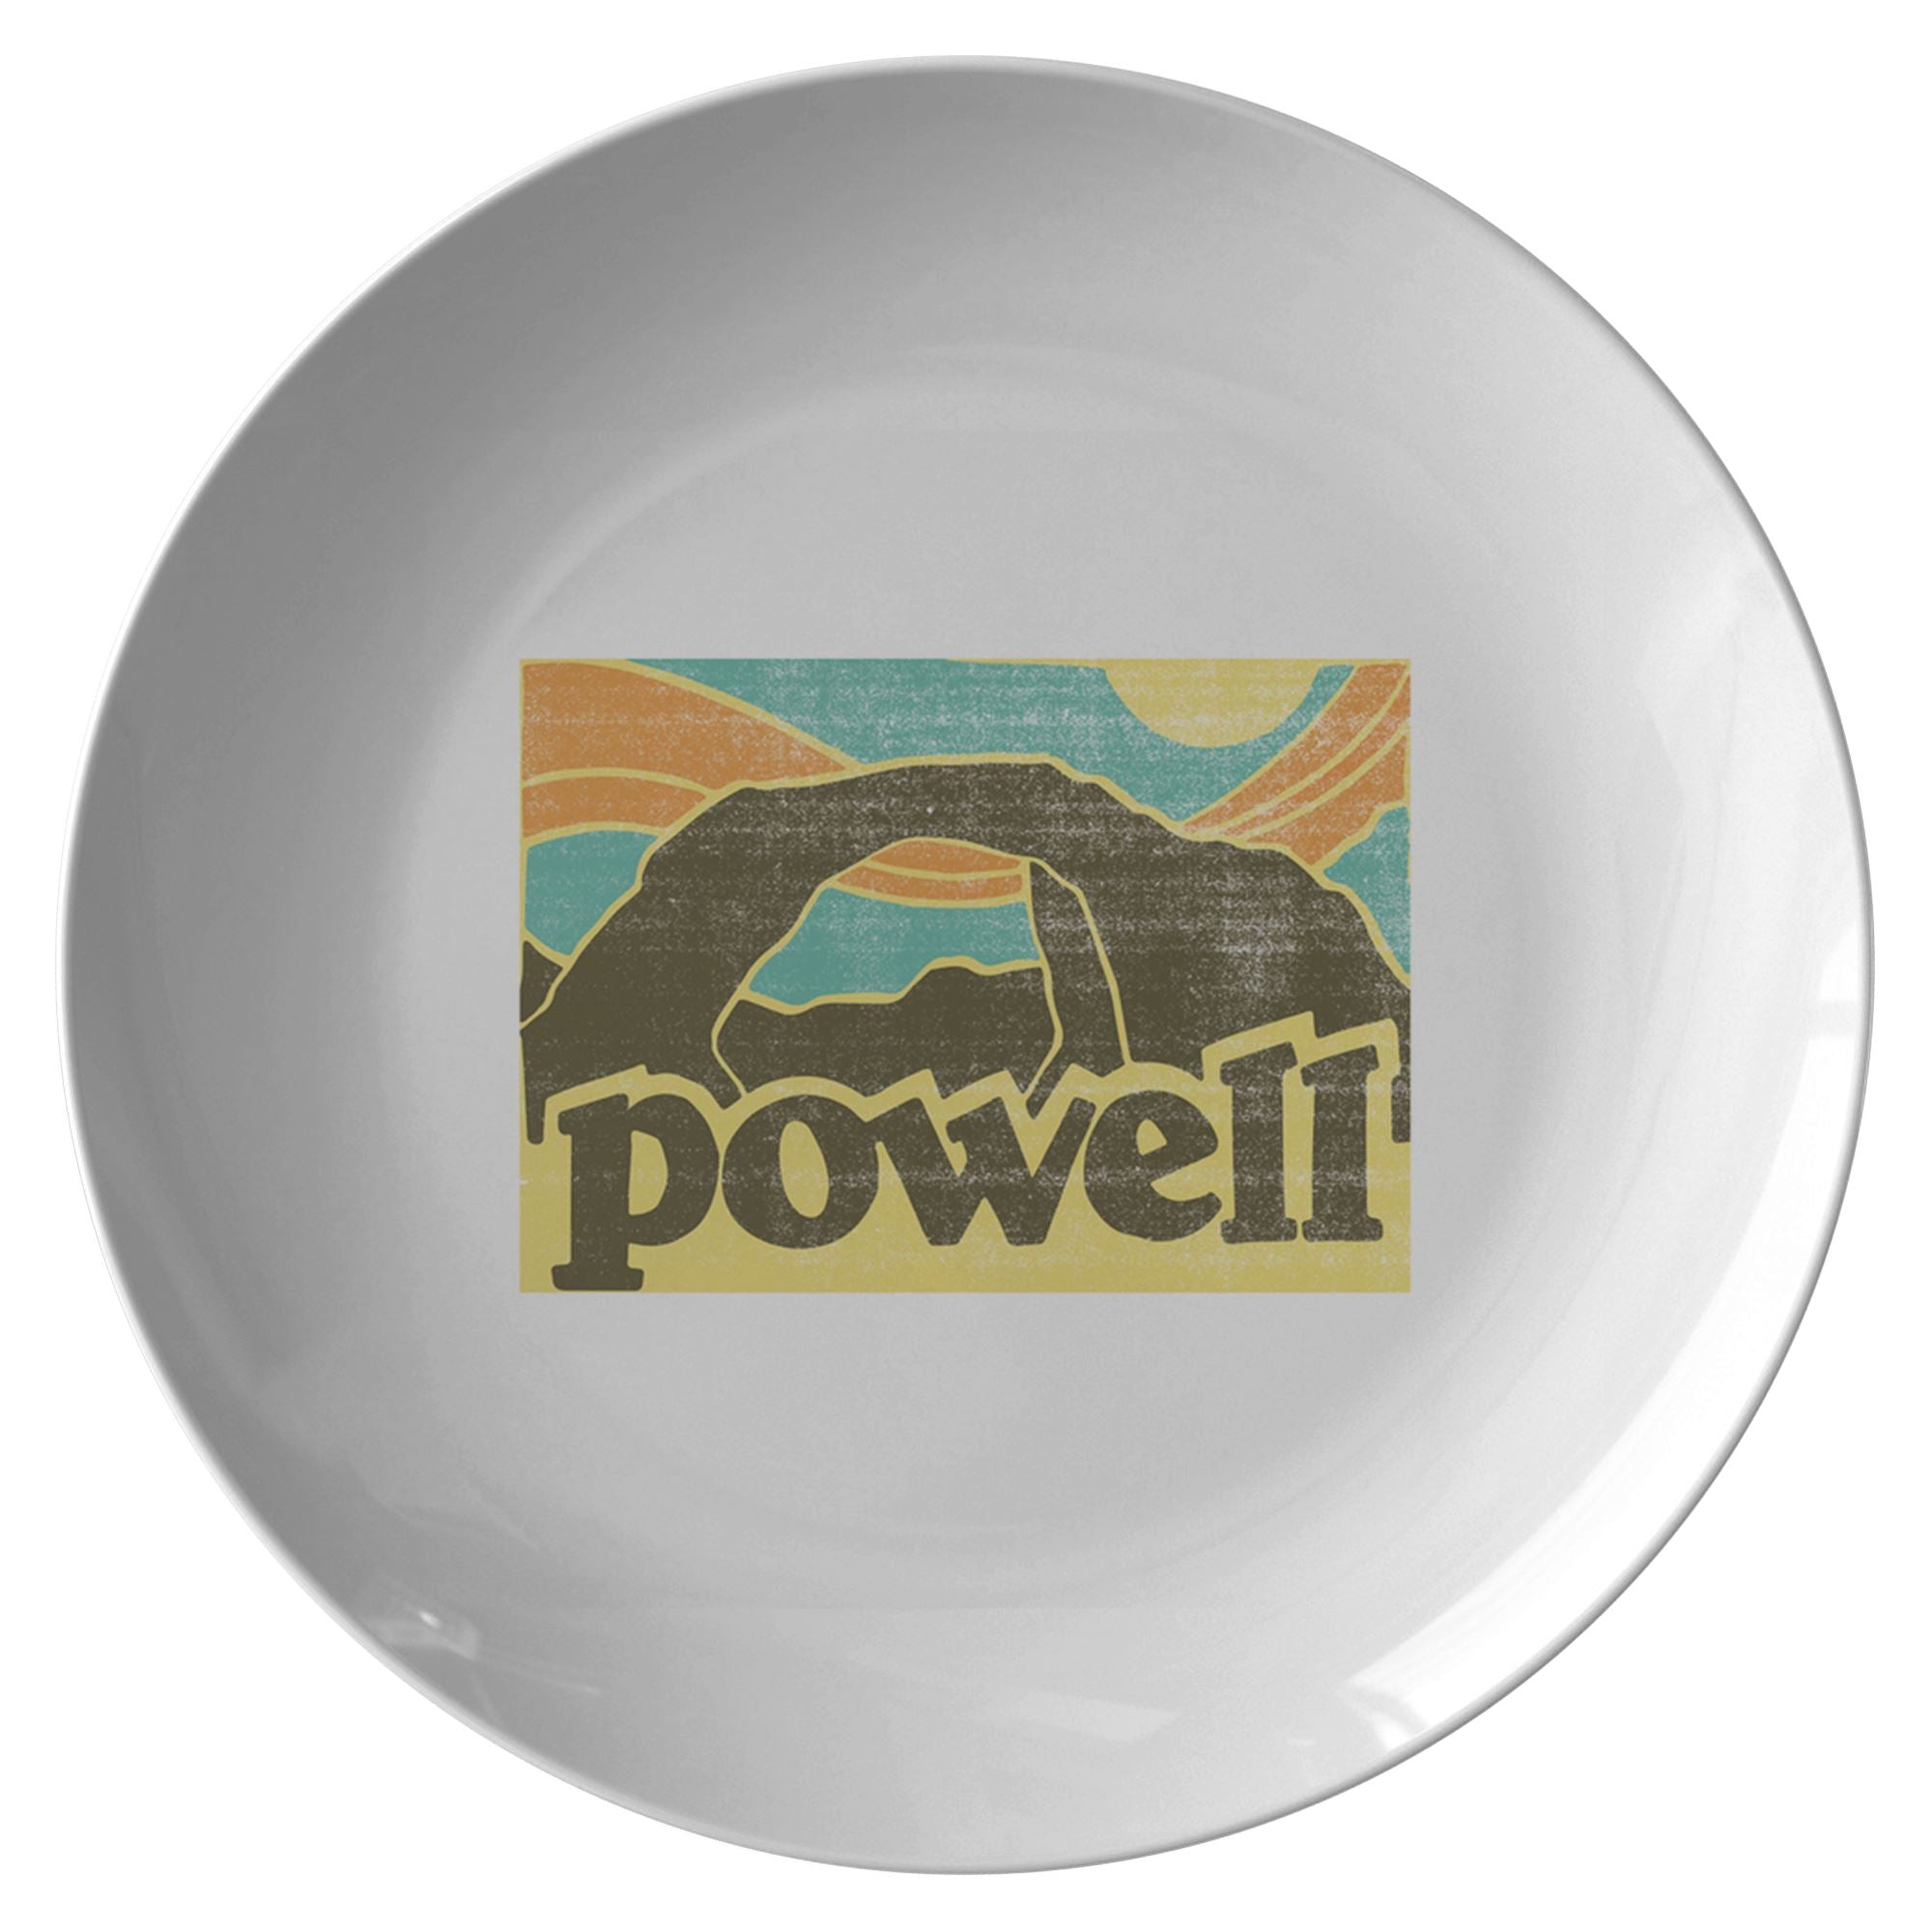 Retro Powell Plate - Houseboat Kings